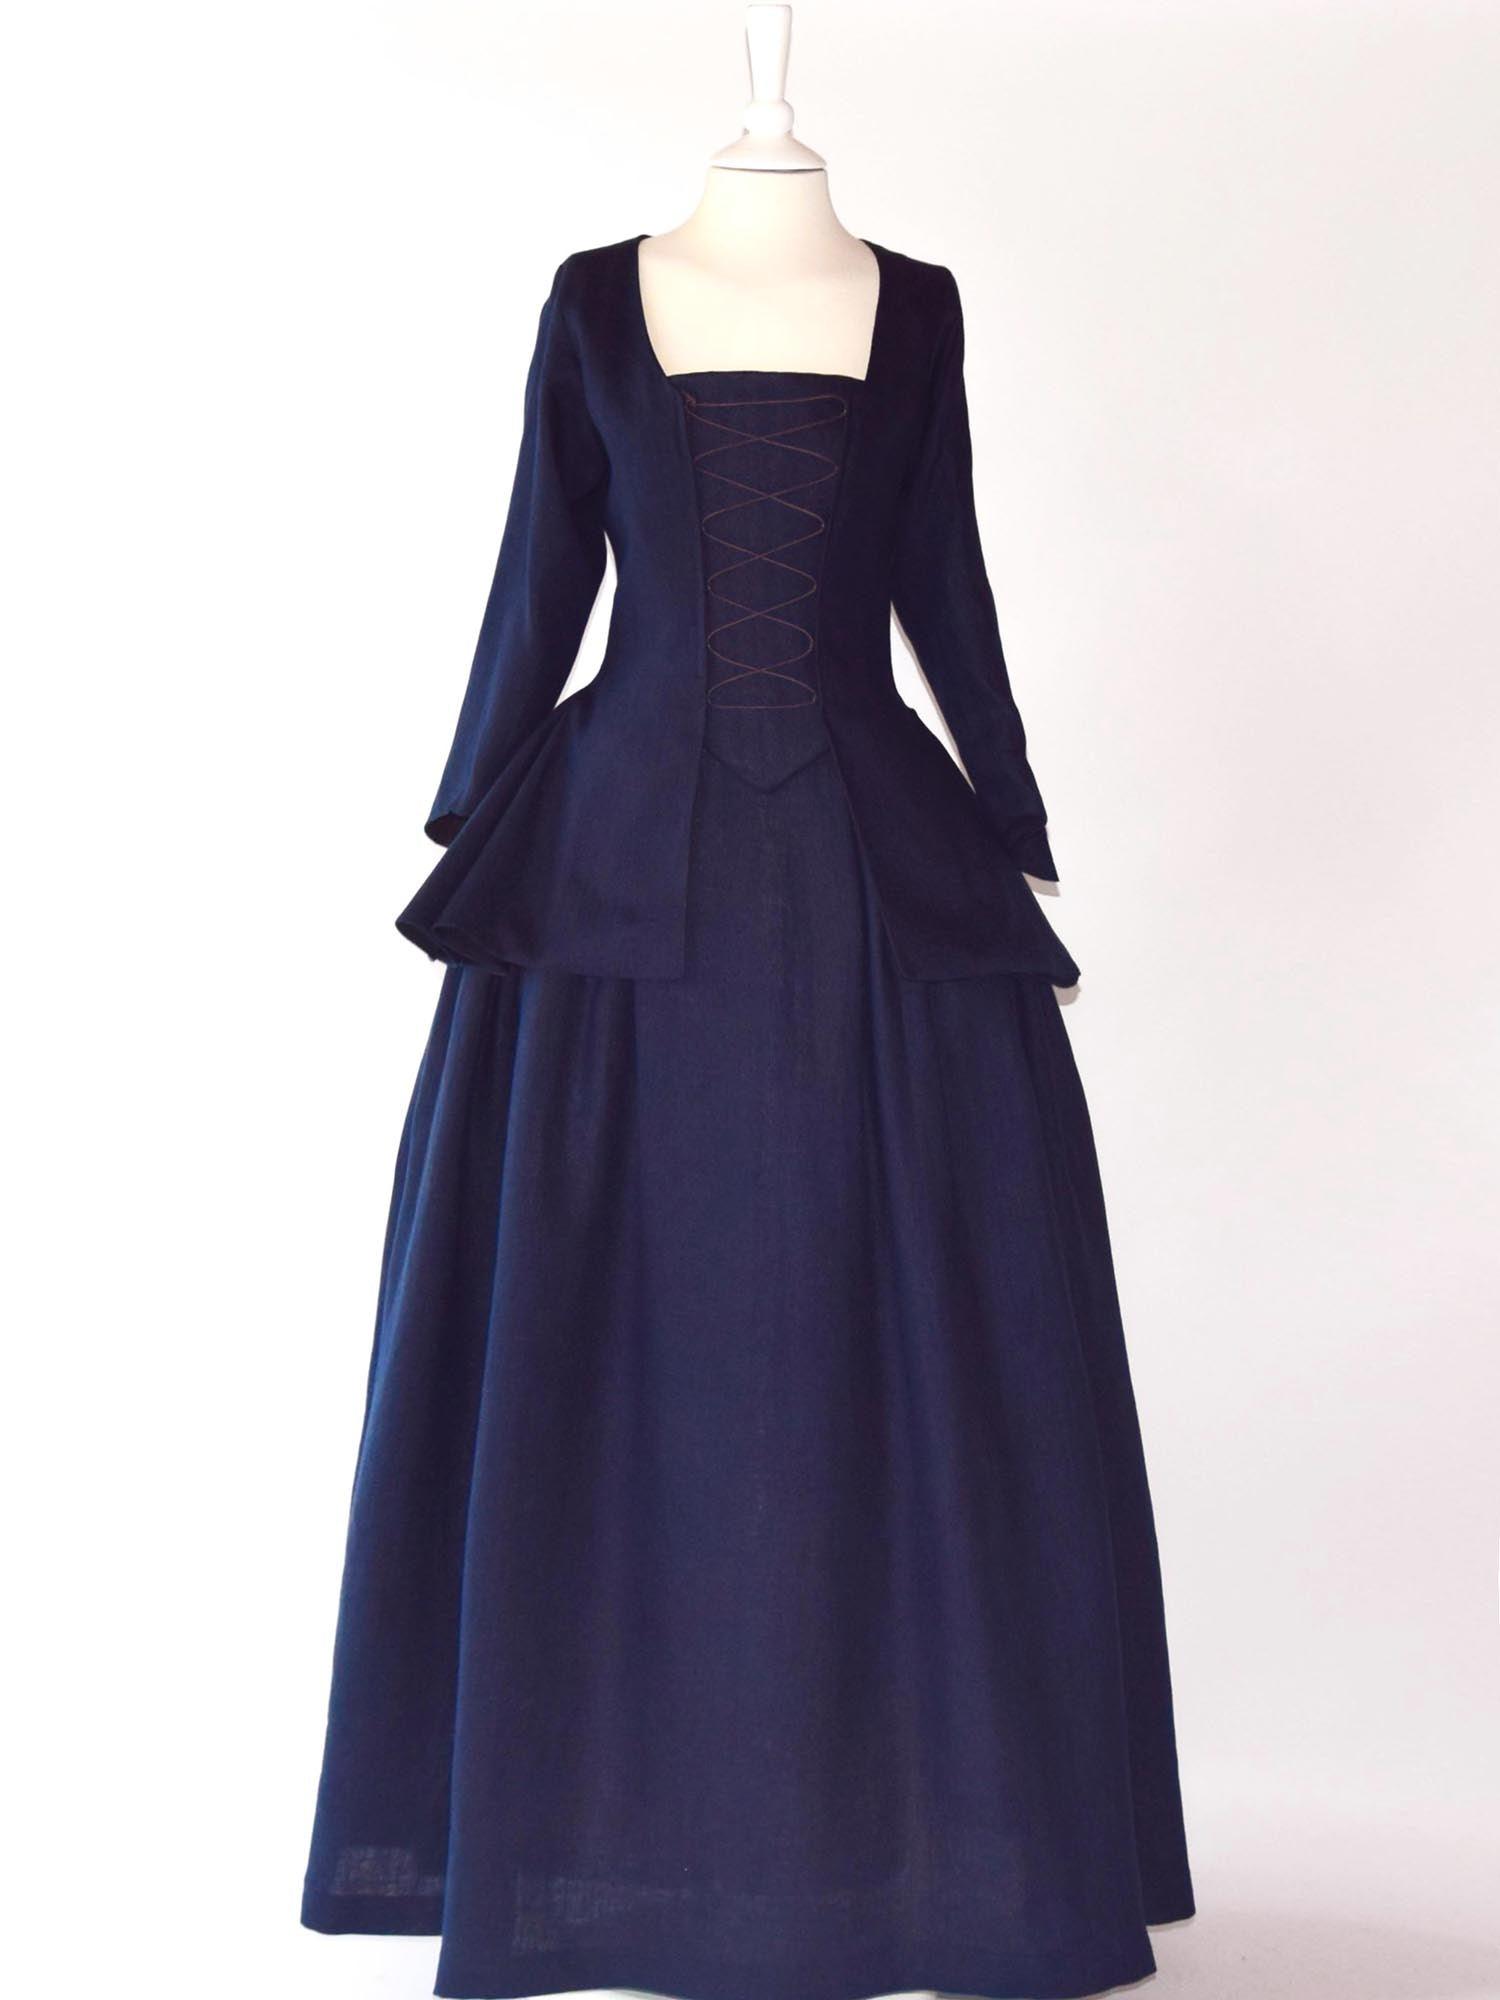 JANET, Colonial Costume in Night Blue Linen - Atelier Serraspina - Costume 18ème siècle en lin bleu nuit